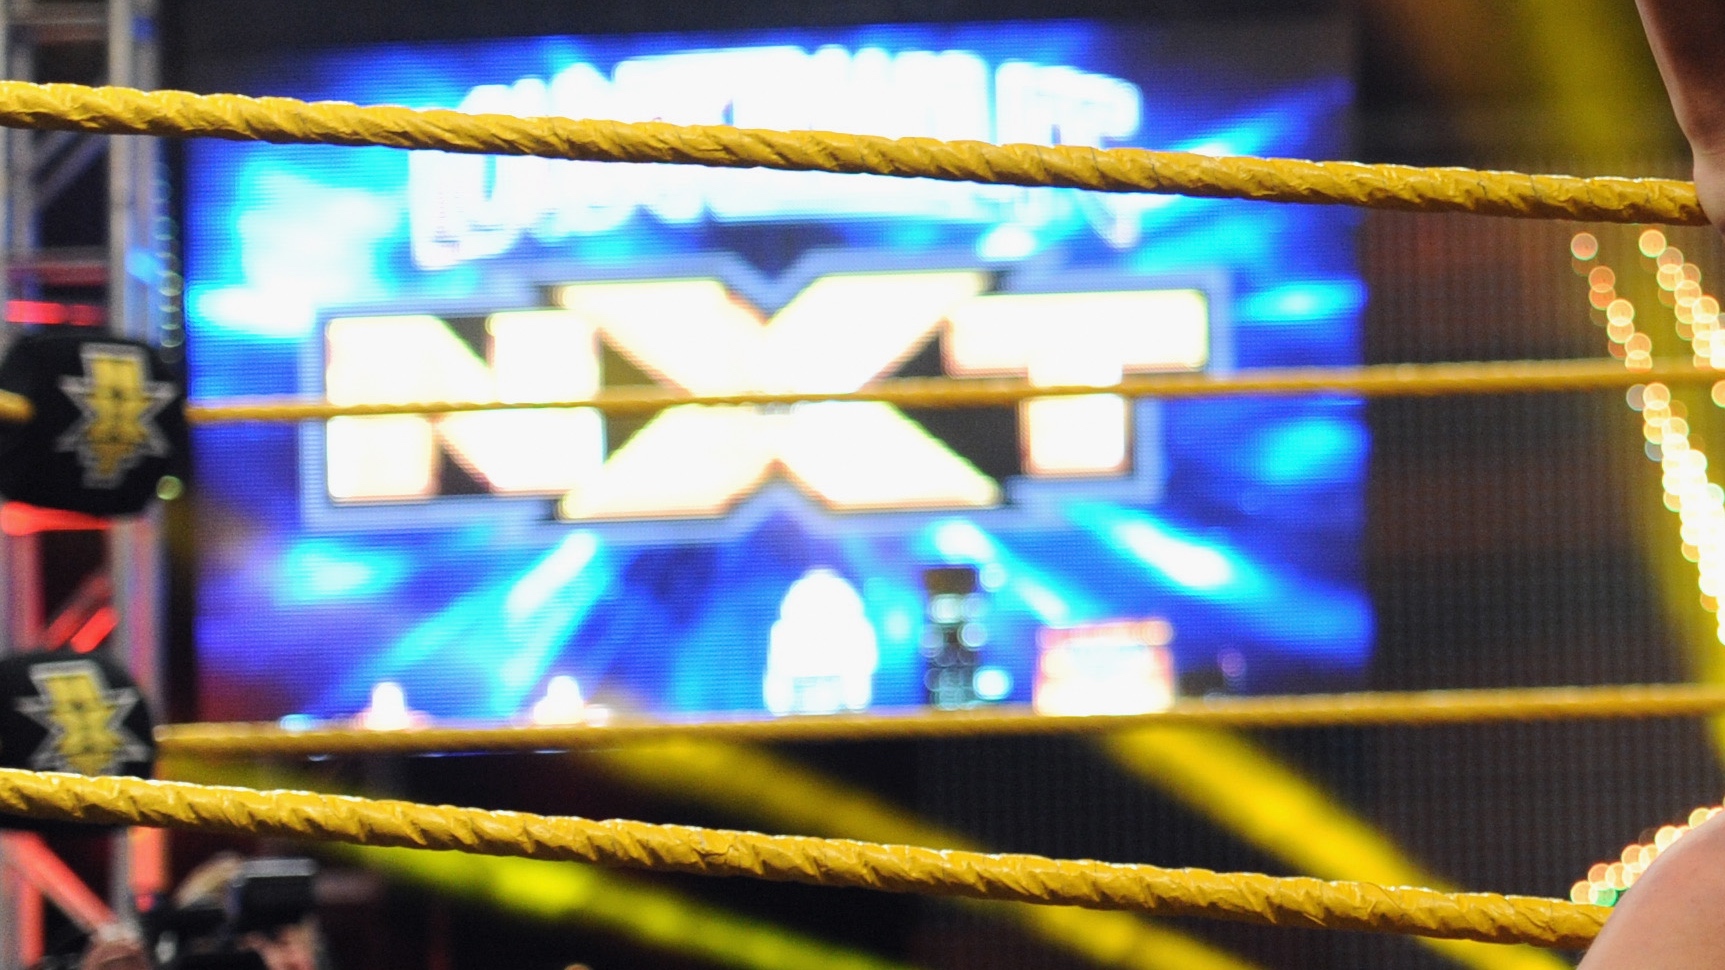 NXT wrestling logo